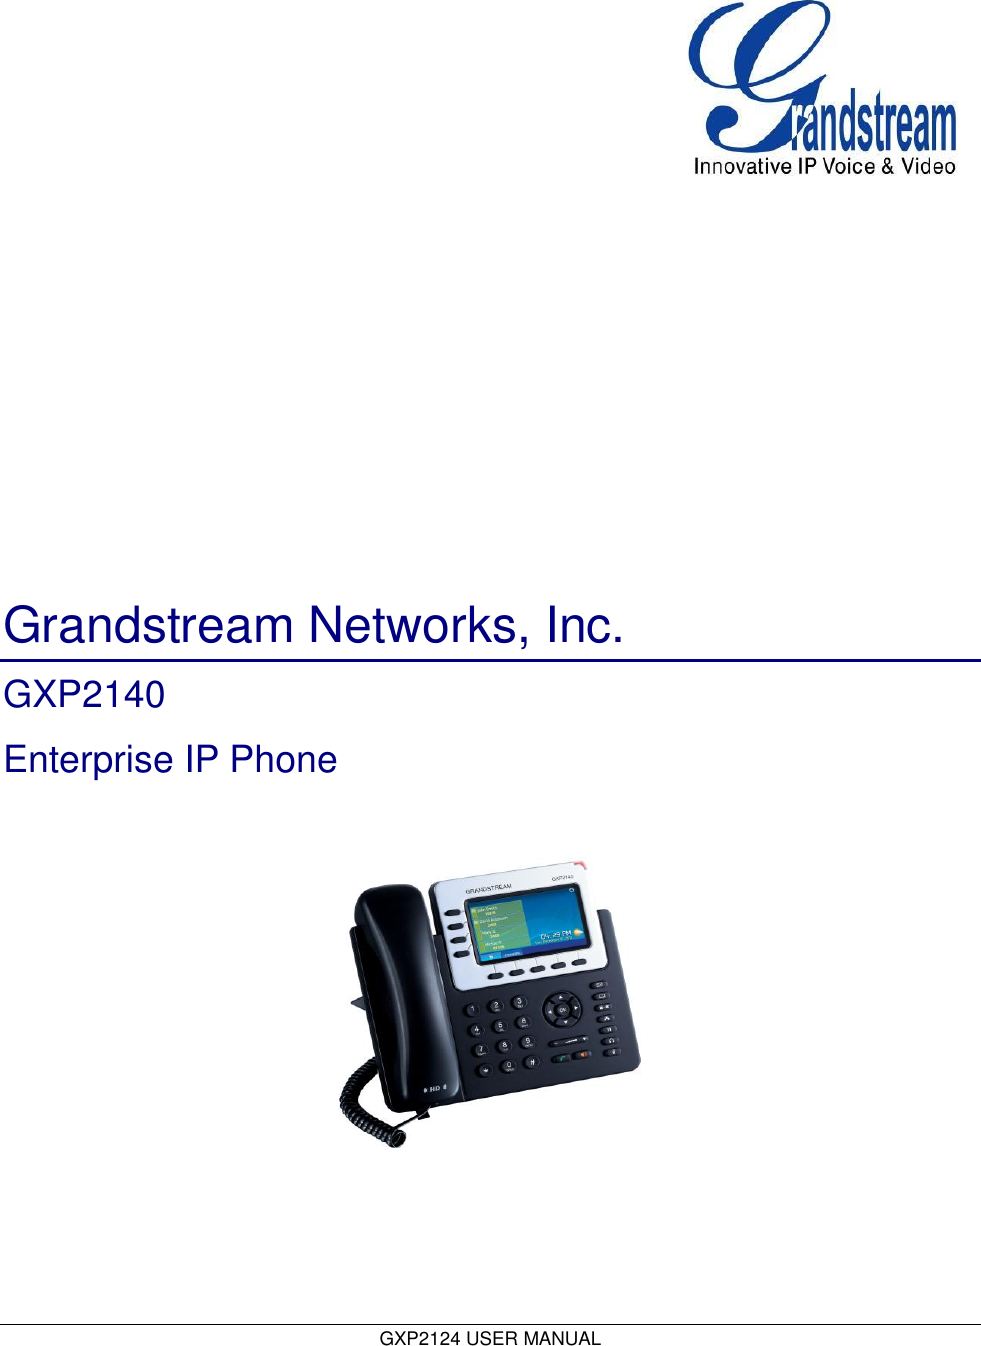  GXP2124 USER MANUAL                                                 Grandstream Networks, Inc. GXP2140 Enterprise IP Phone                